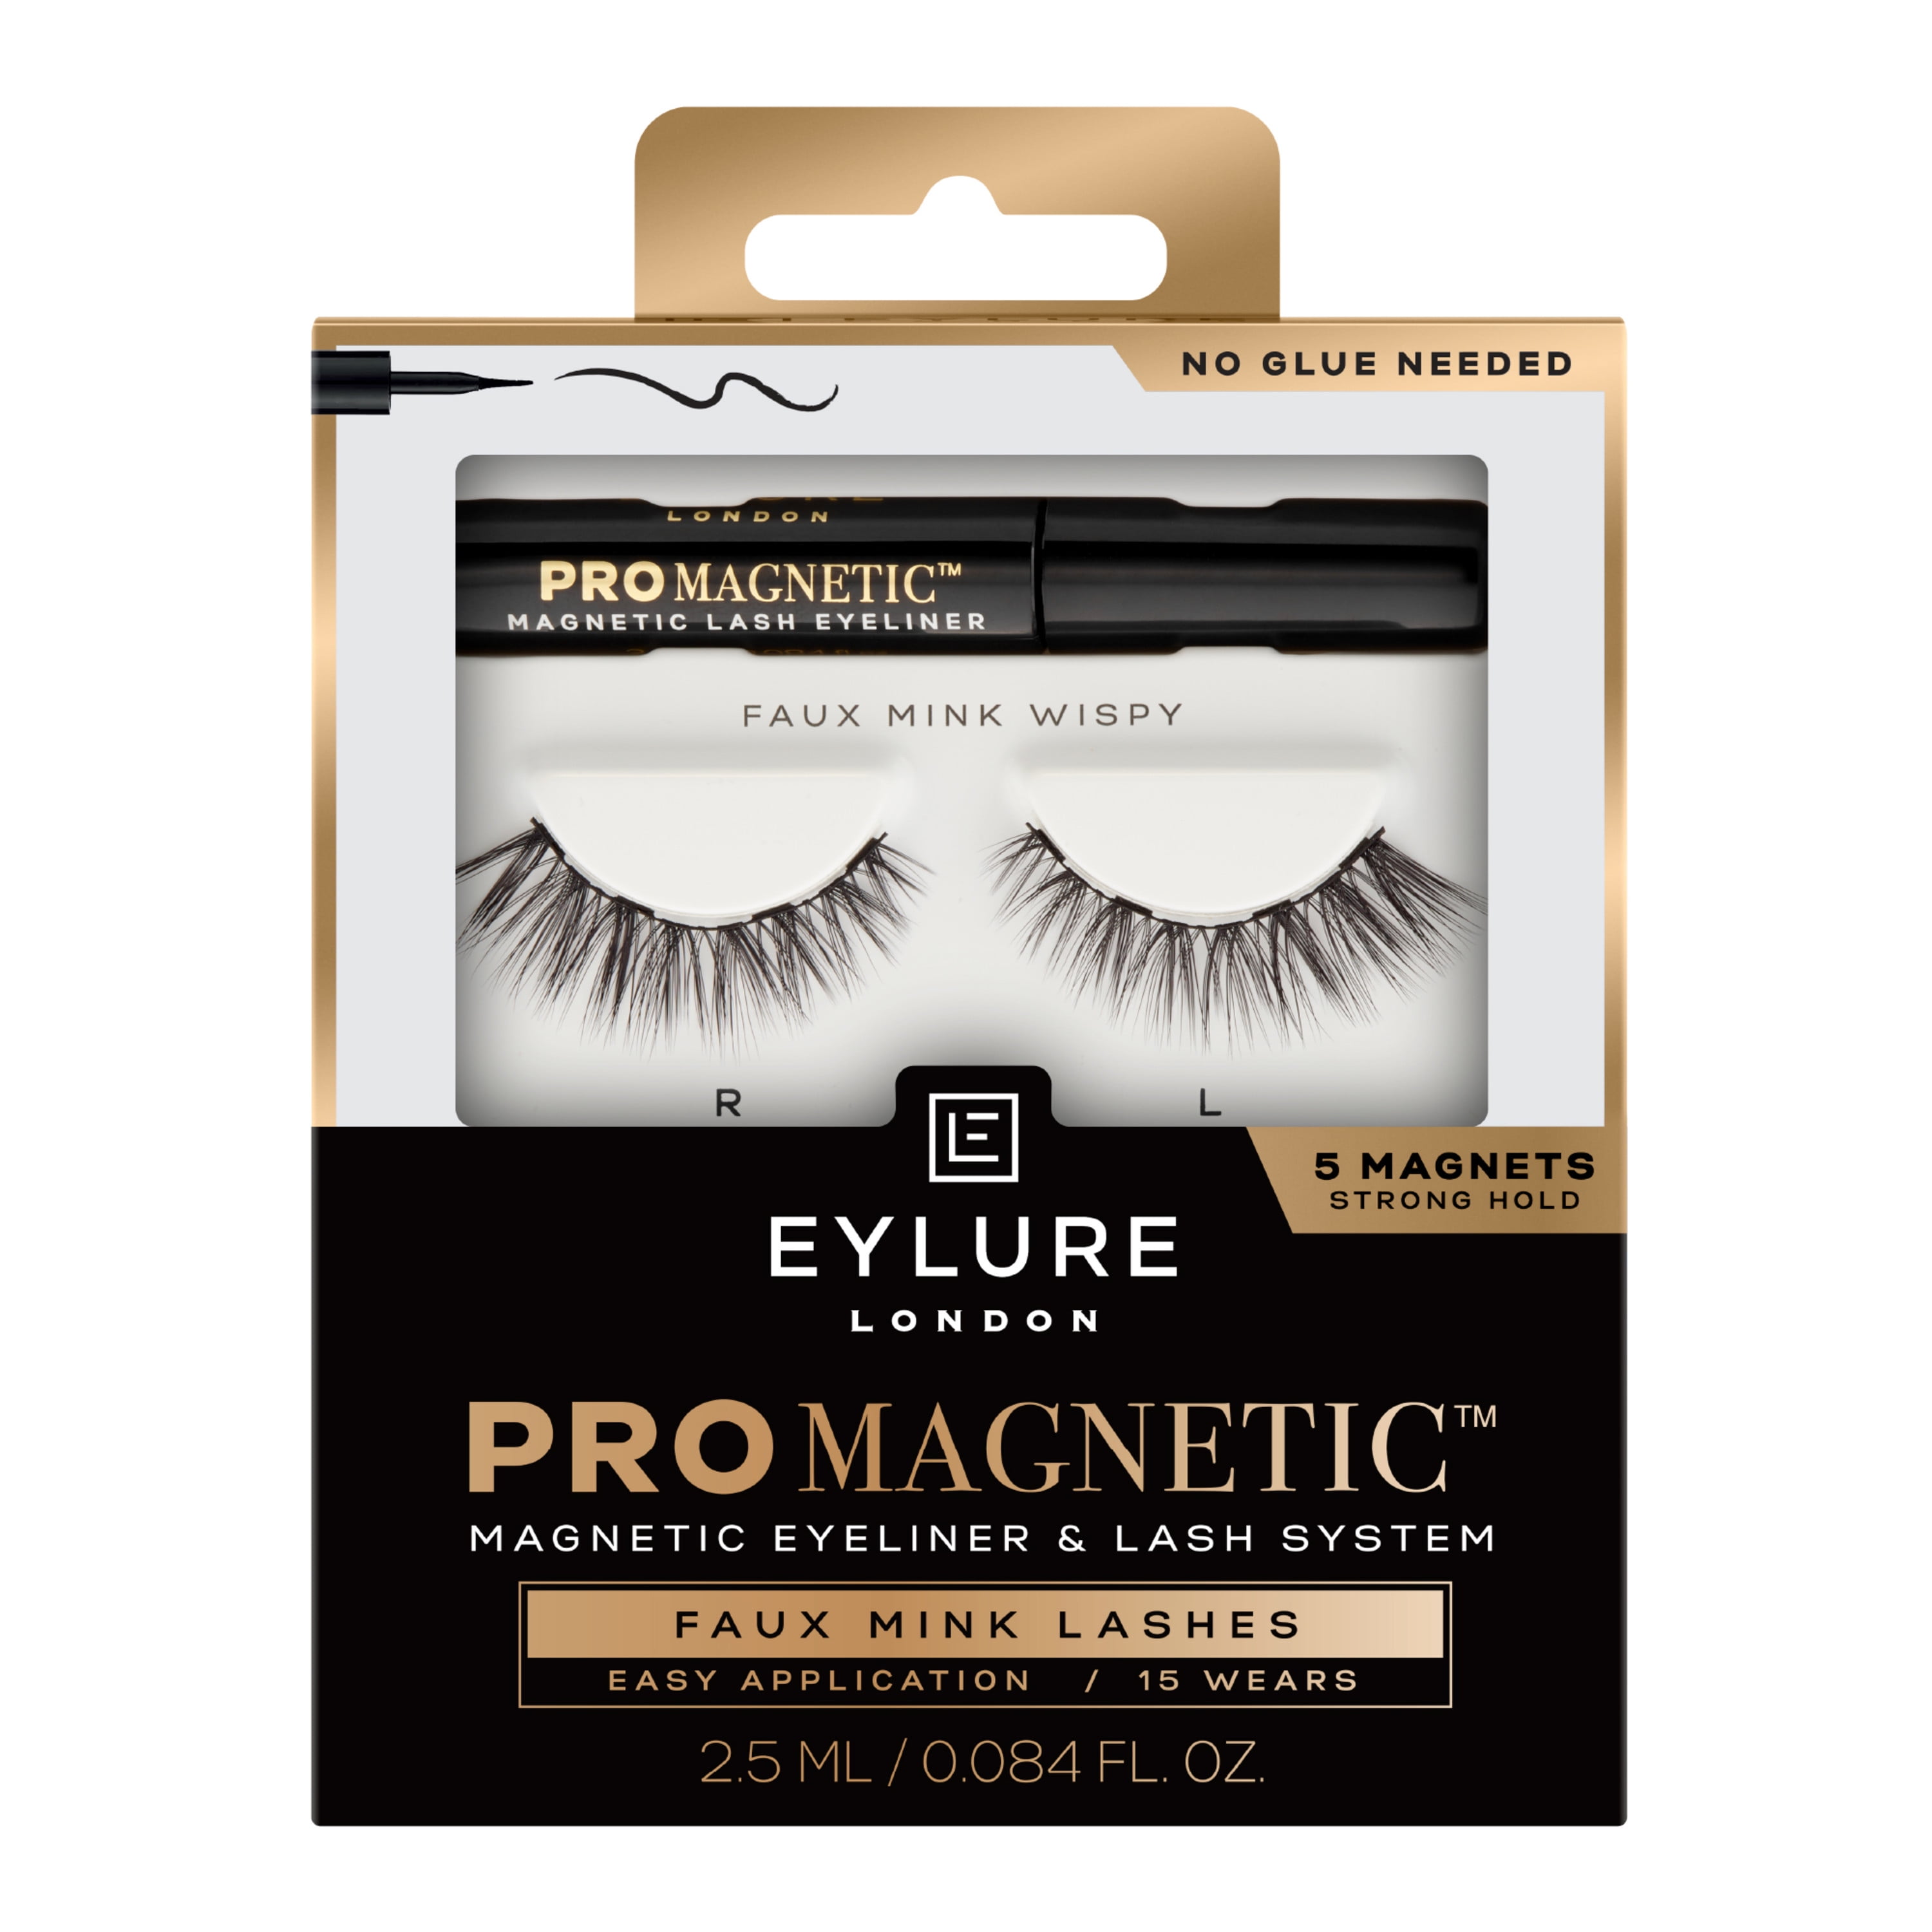 Eylure PROMAGNETIC Eyeliner & Lash Kit, Faux Mink Wispy, Black